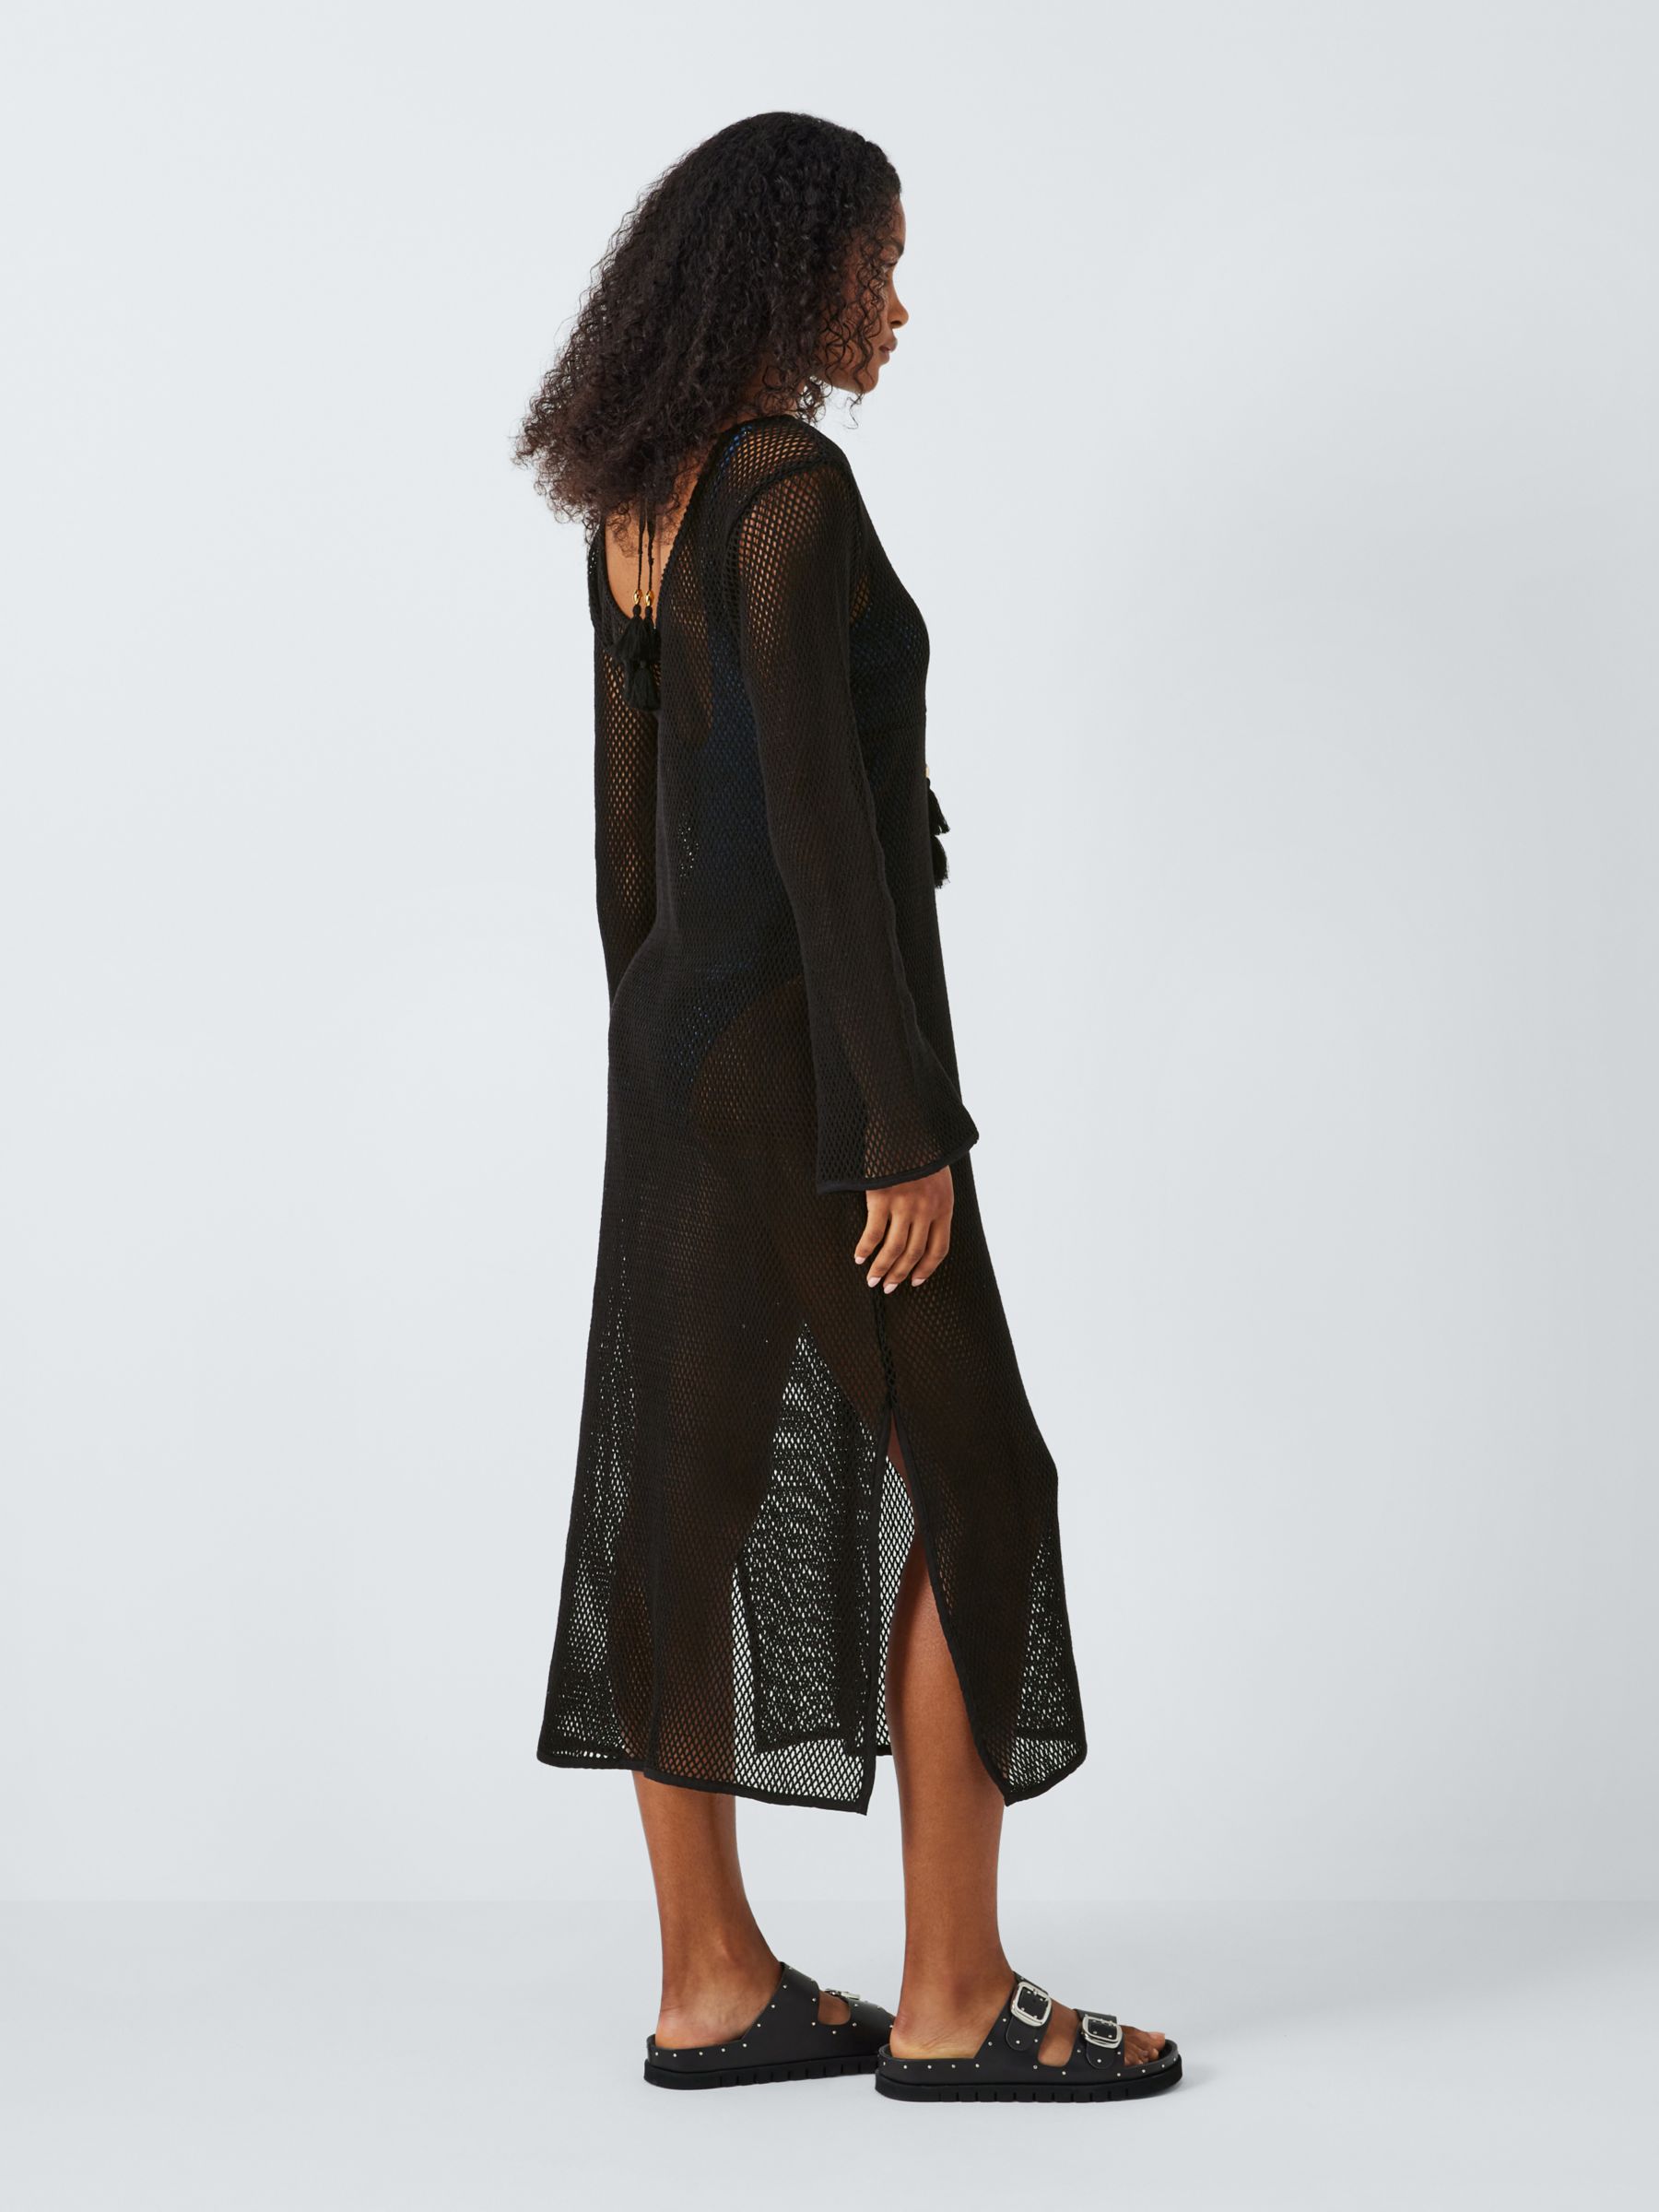 AND/OR Capri Crochet Beach Dress, Black, S